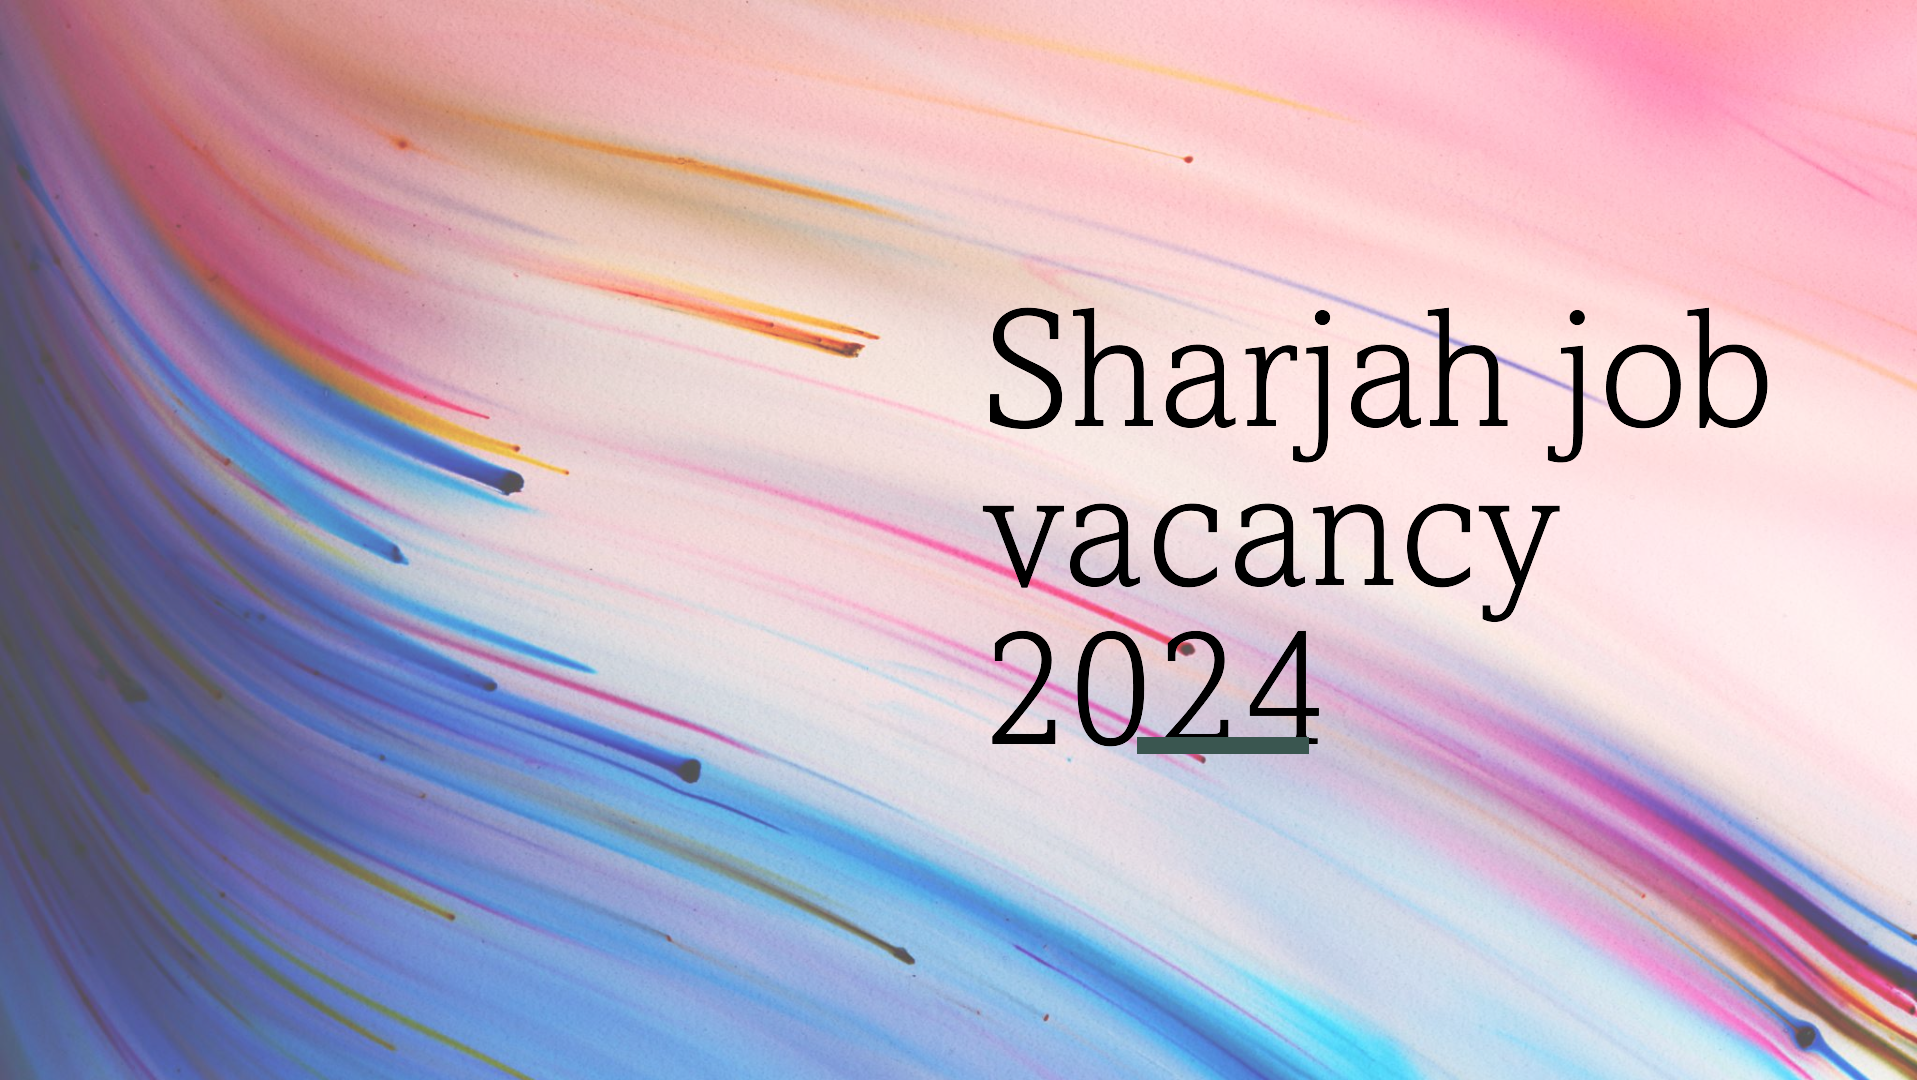 Sharjah job vacancy 2024